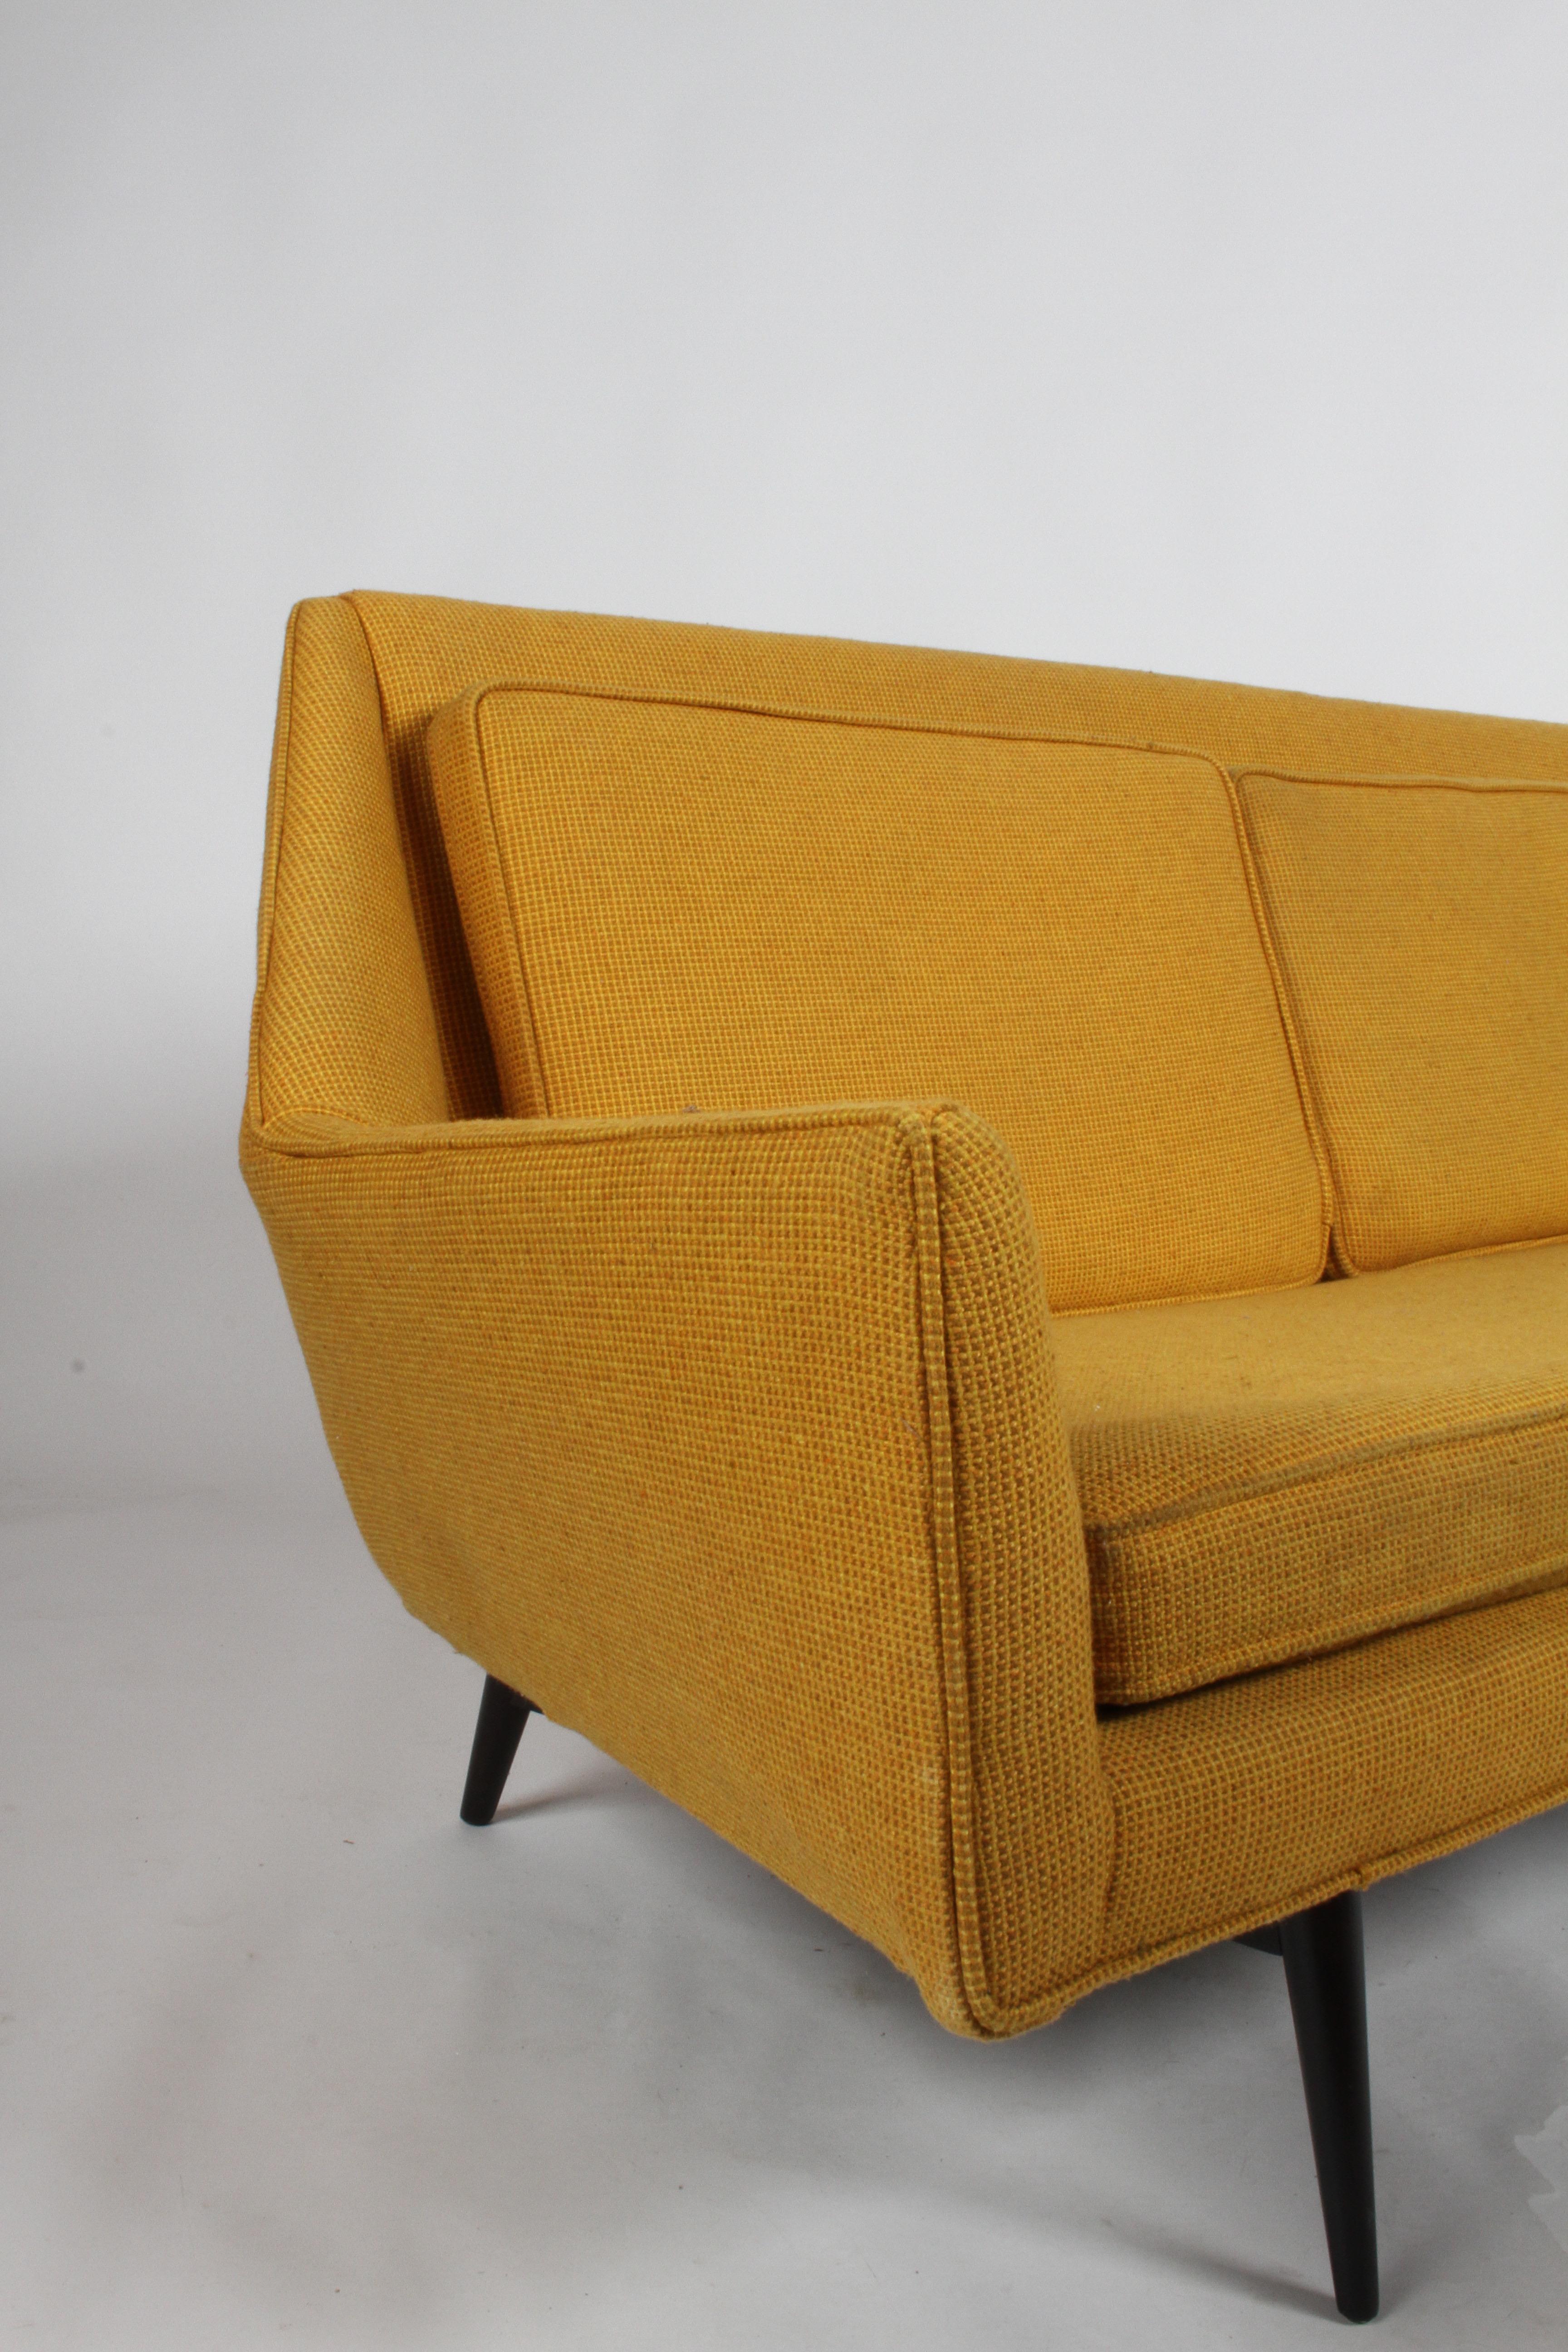 Rare Mid-Century Modern Paul McCobb for Directional Sculptural Cubist Sofa  For Sale 8